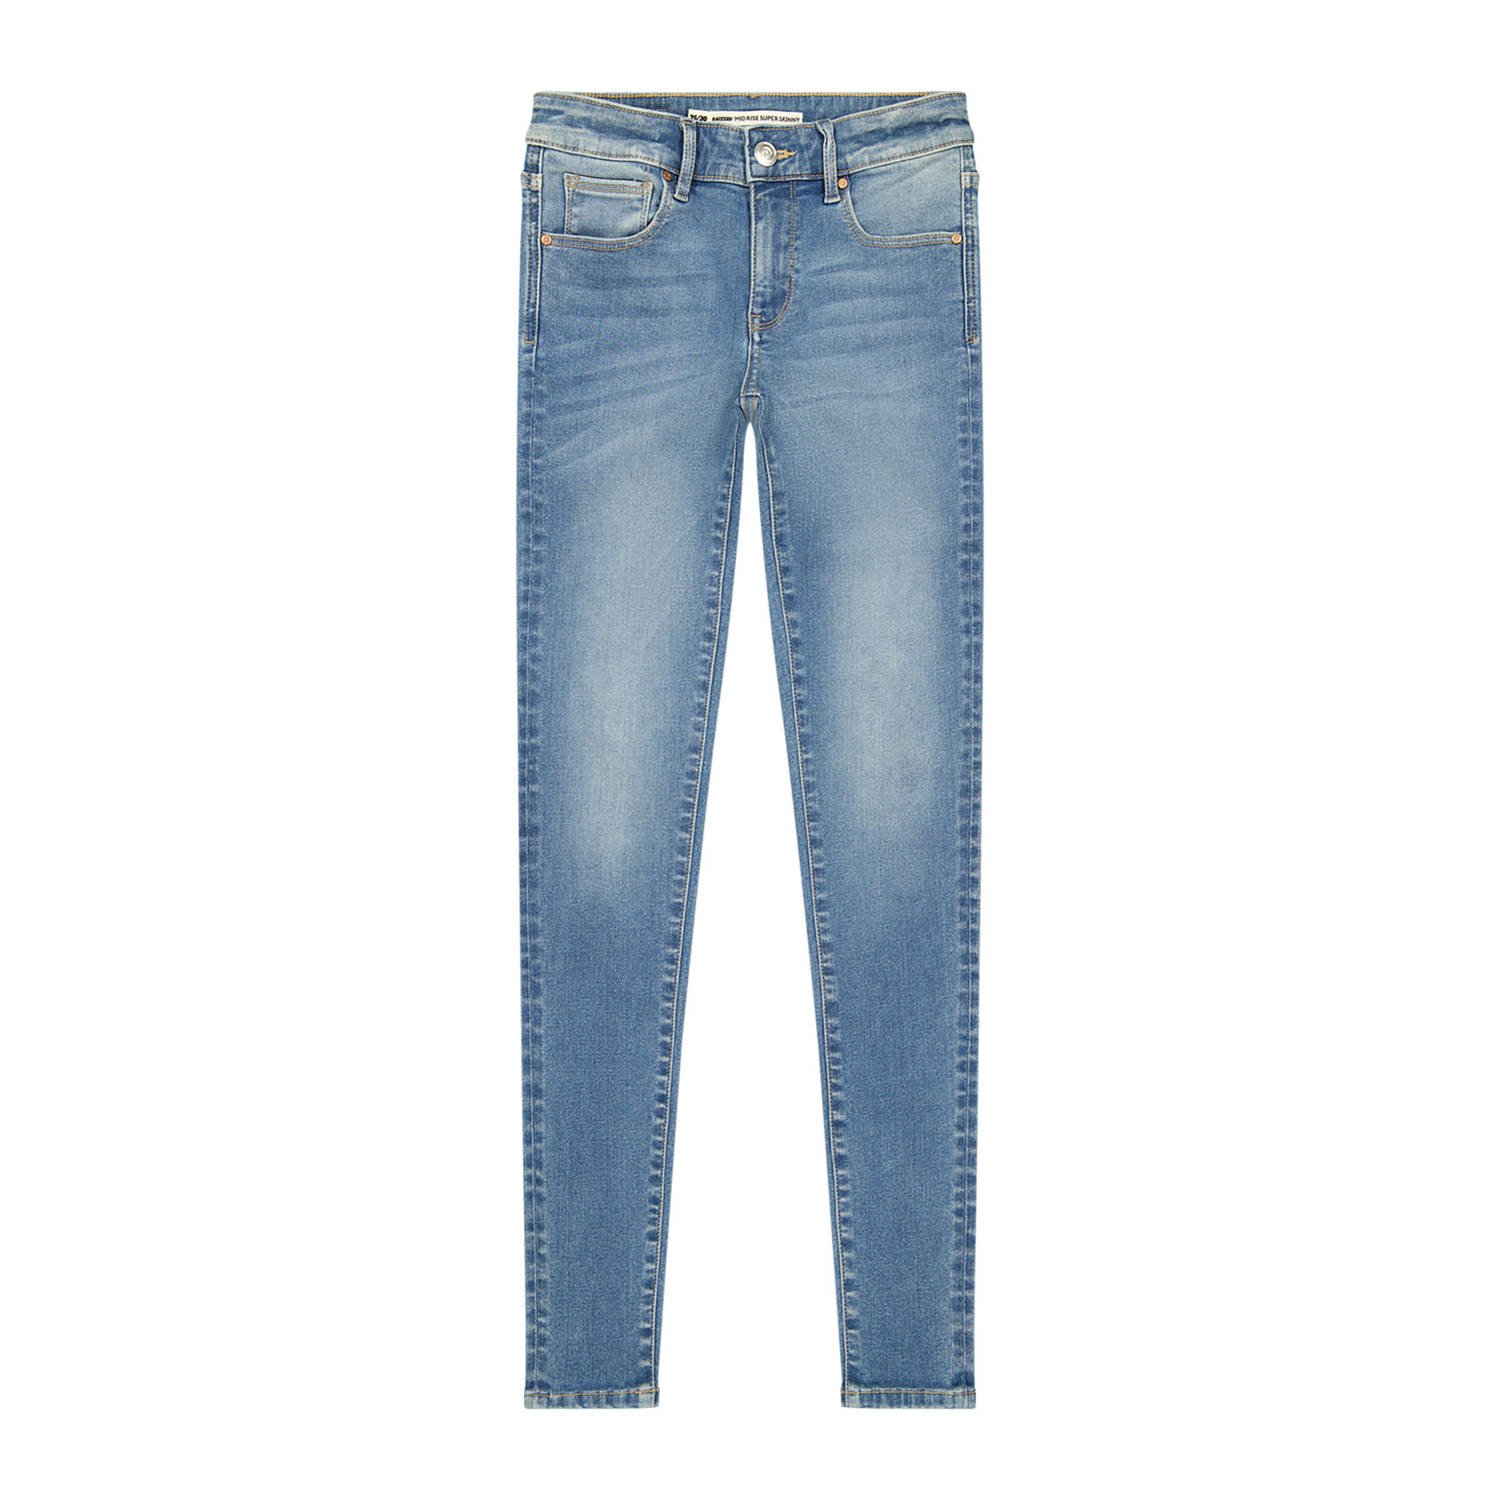 Raizzed high waist skinny jeans Montana light blue denim